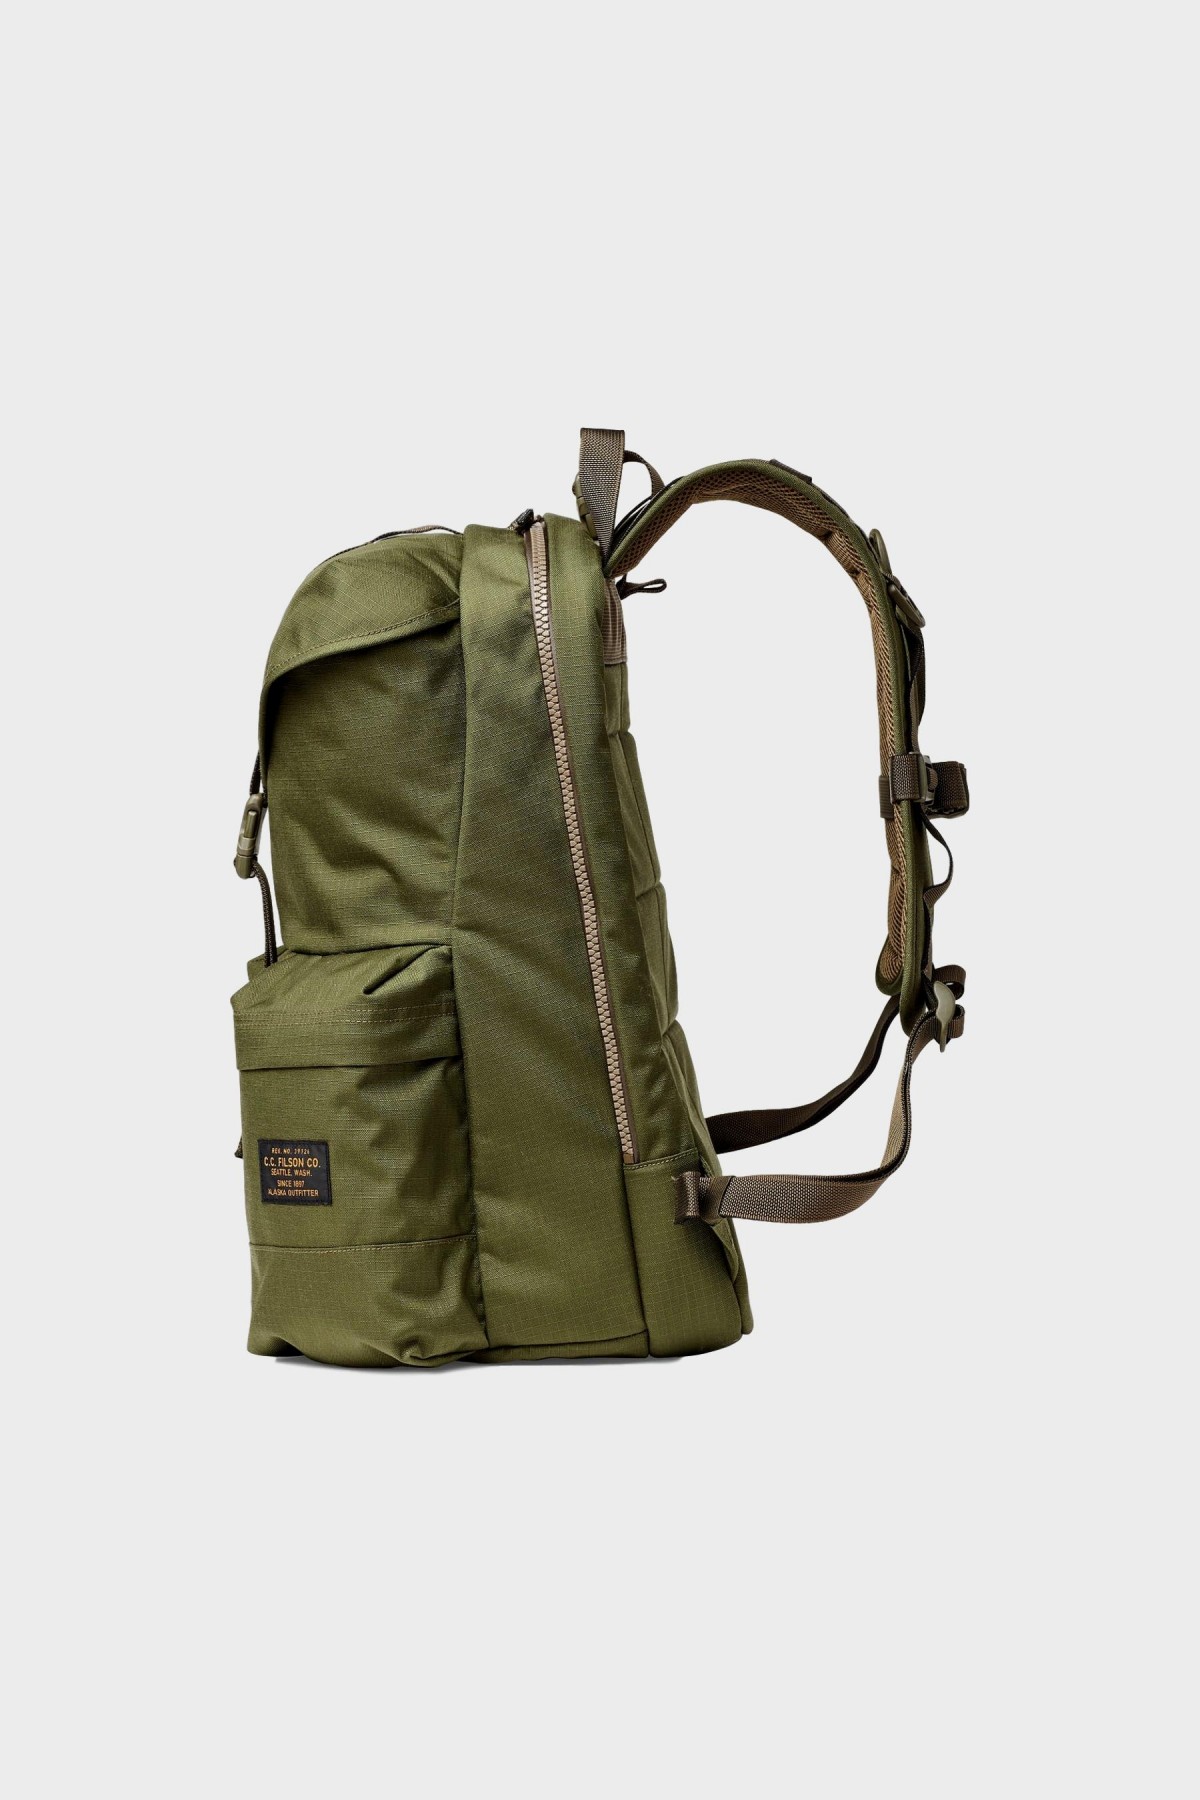 Filson Ripstop Nylon Backpack in Surplus Green